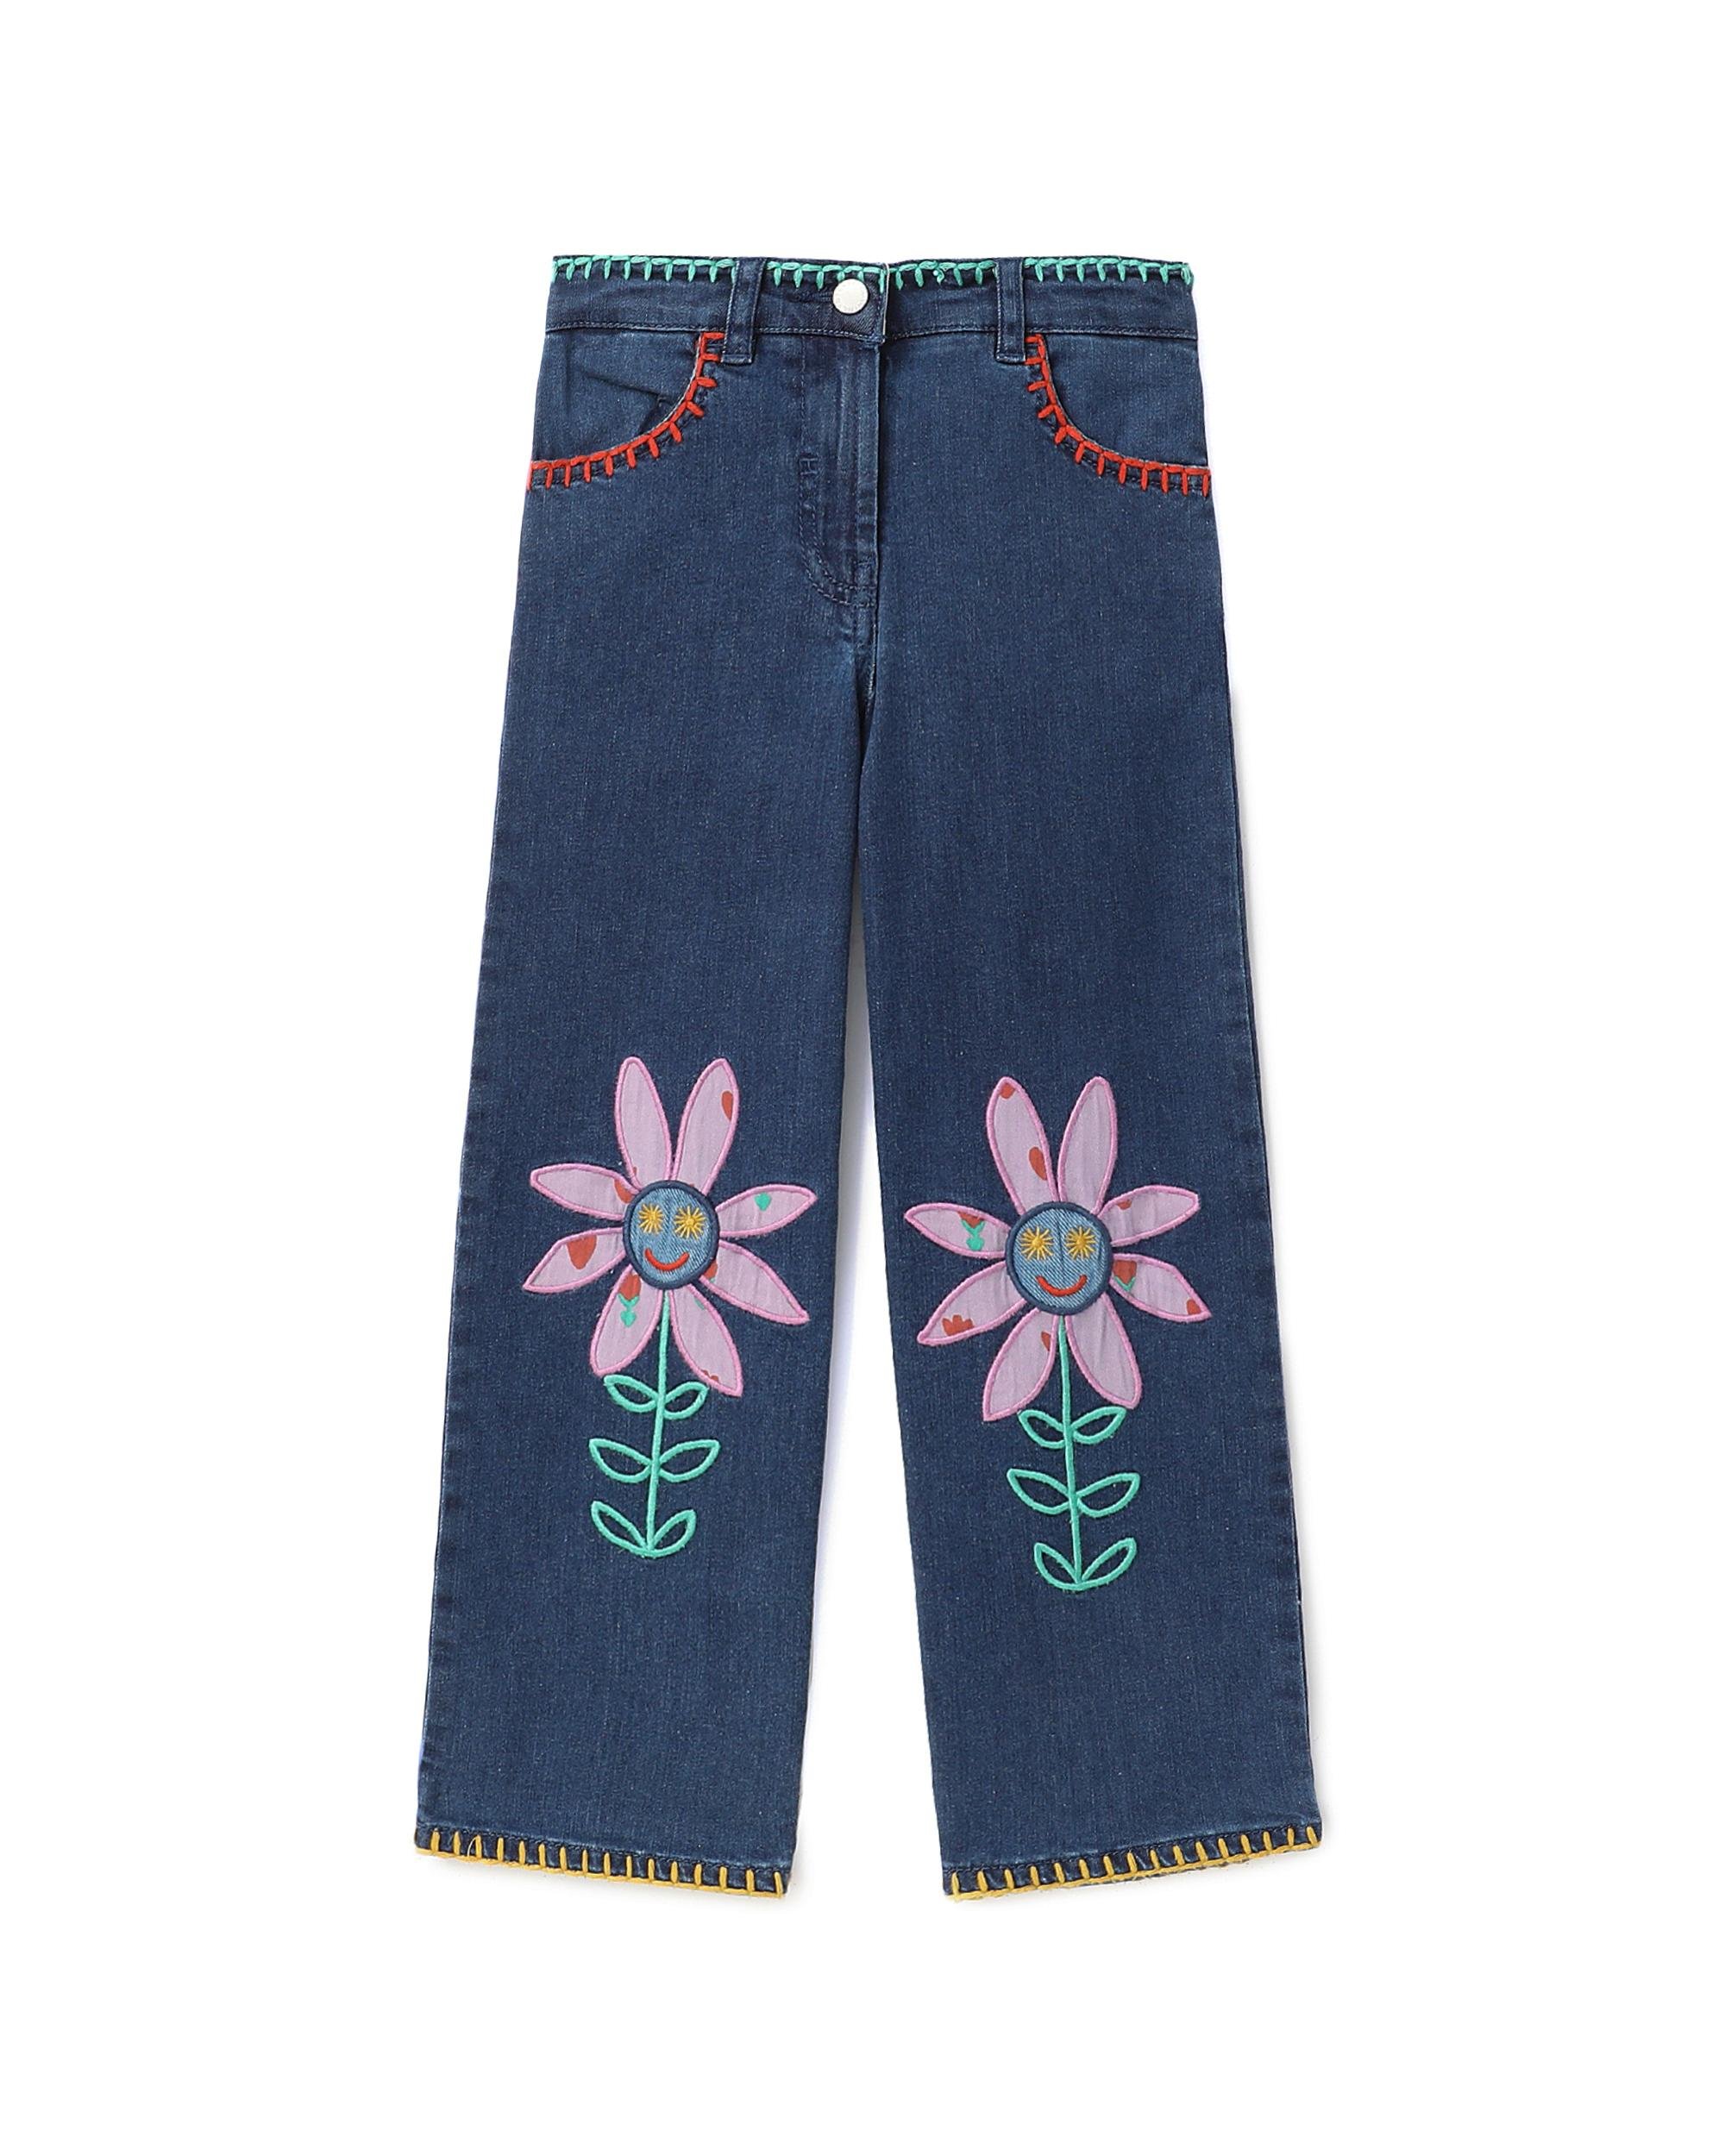 Kids floral jeans by STELLA MCCARTNEY